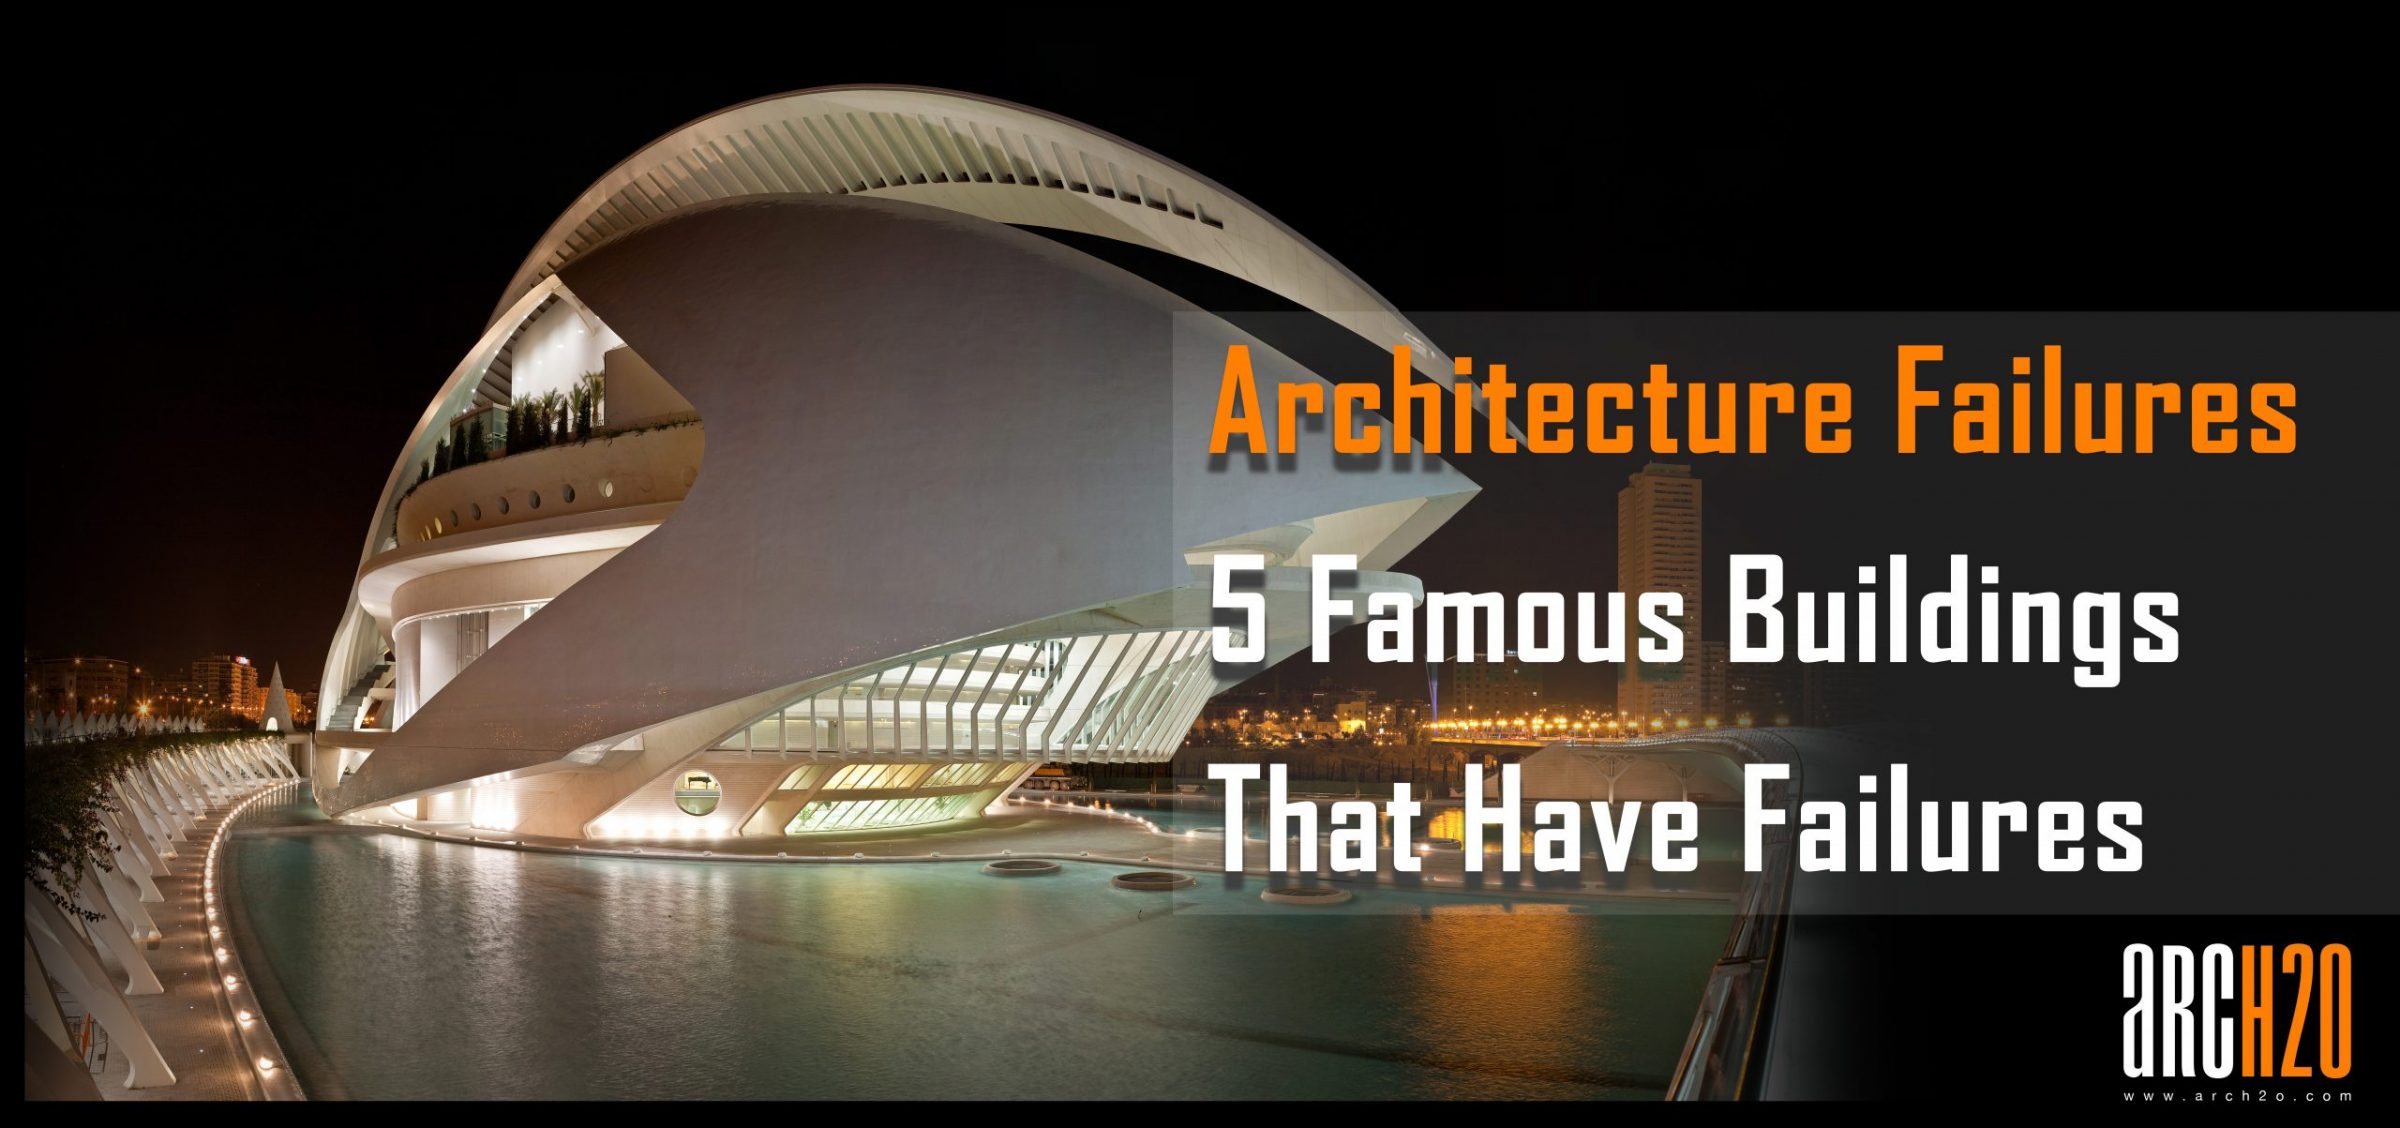 top ten architects